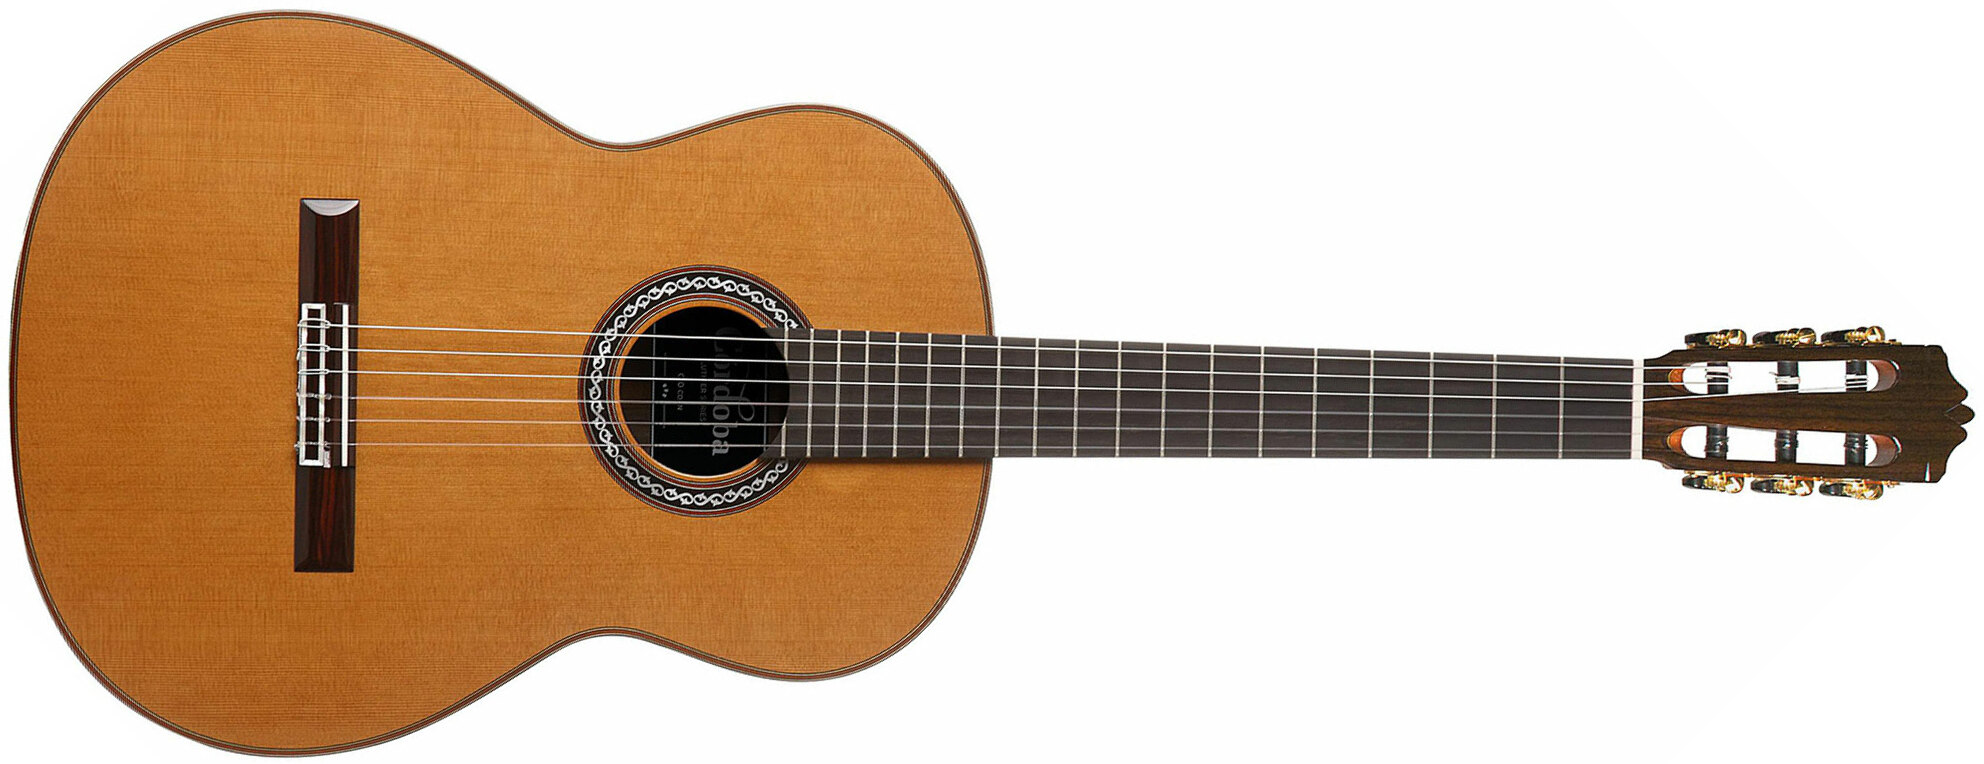 Cordoba C9 Cd Cedar Top Luthier Cedre Acajou Rw - Natural - Classical guitar 4/4 size - Main picture